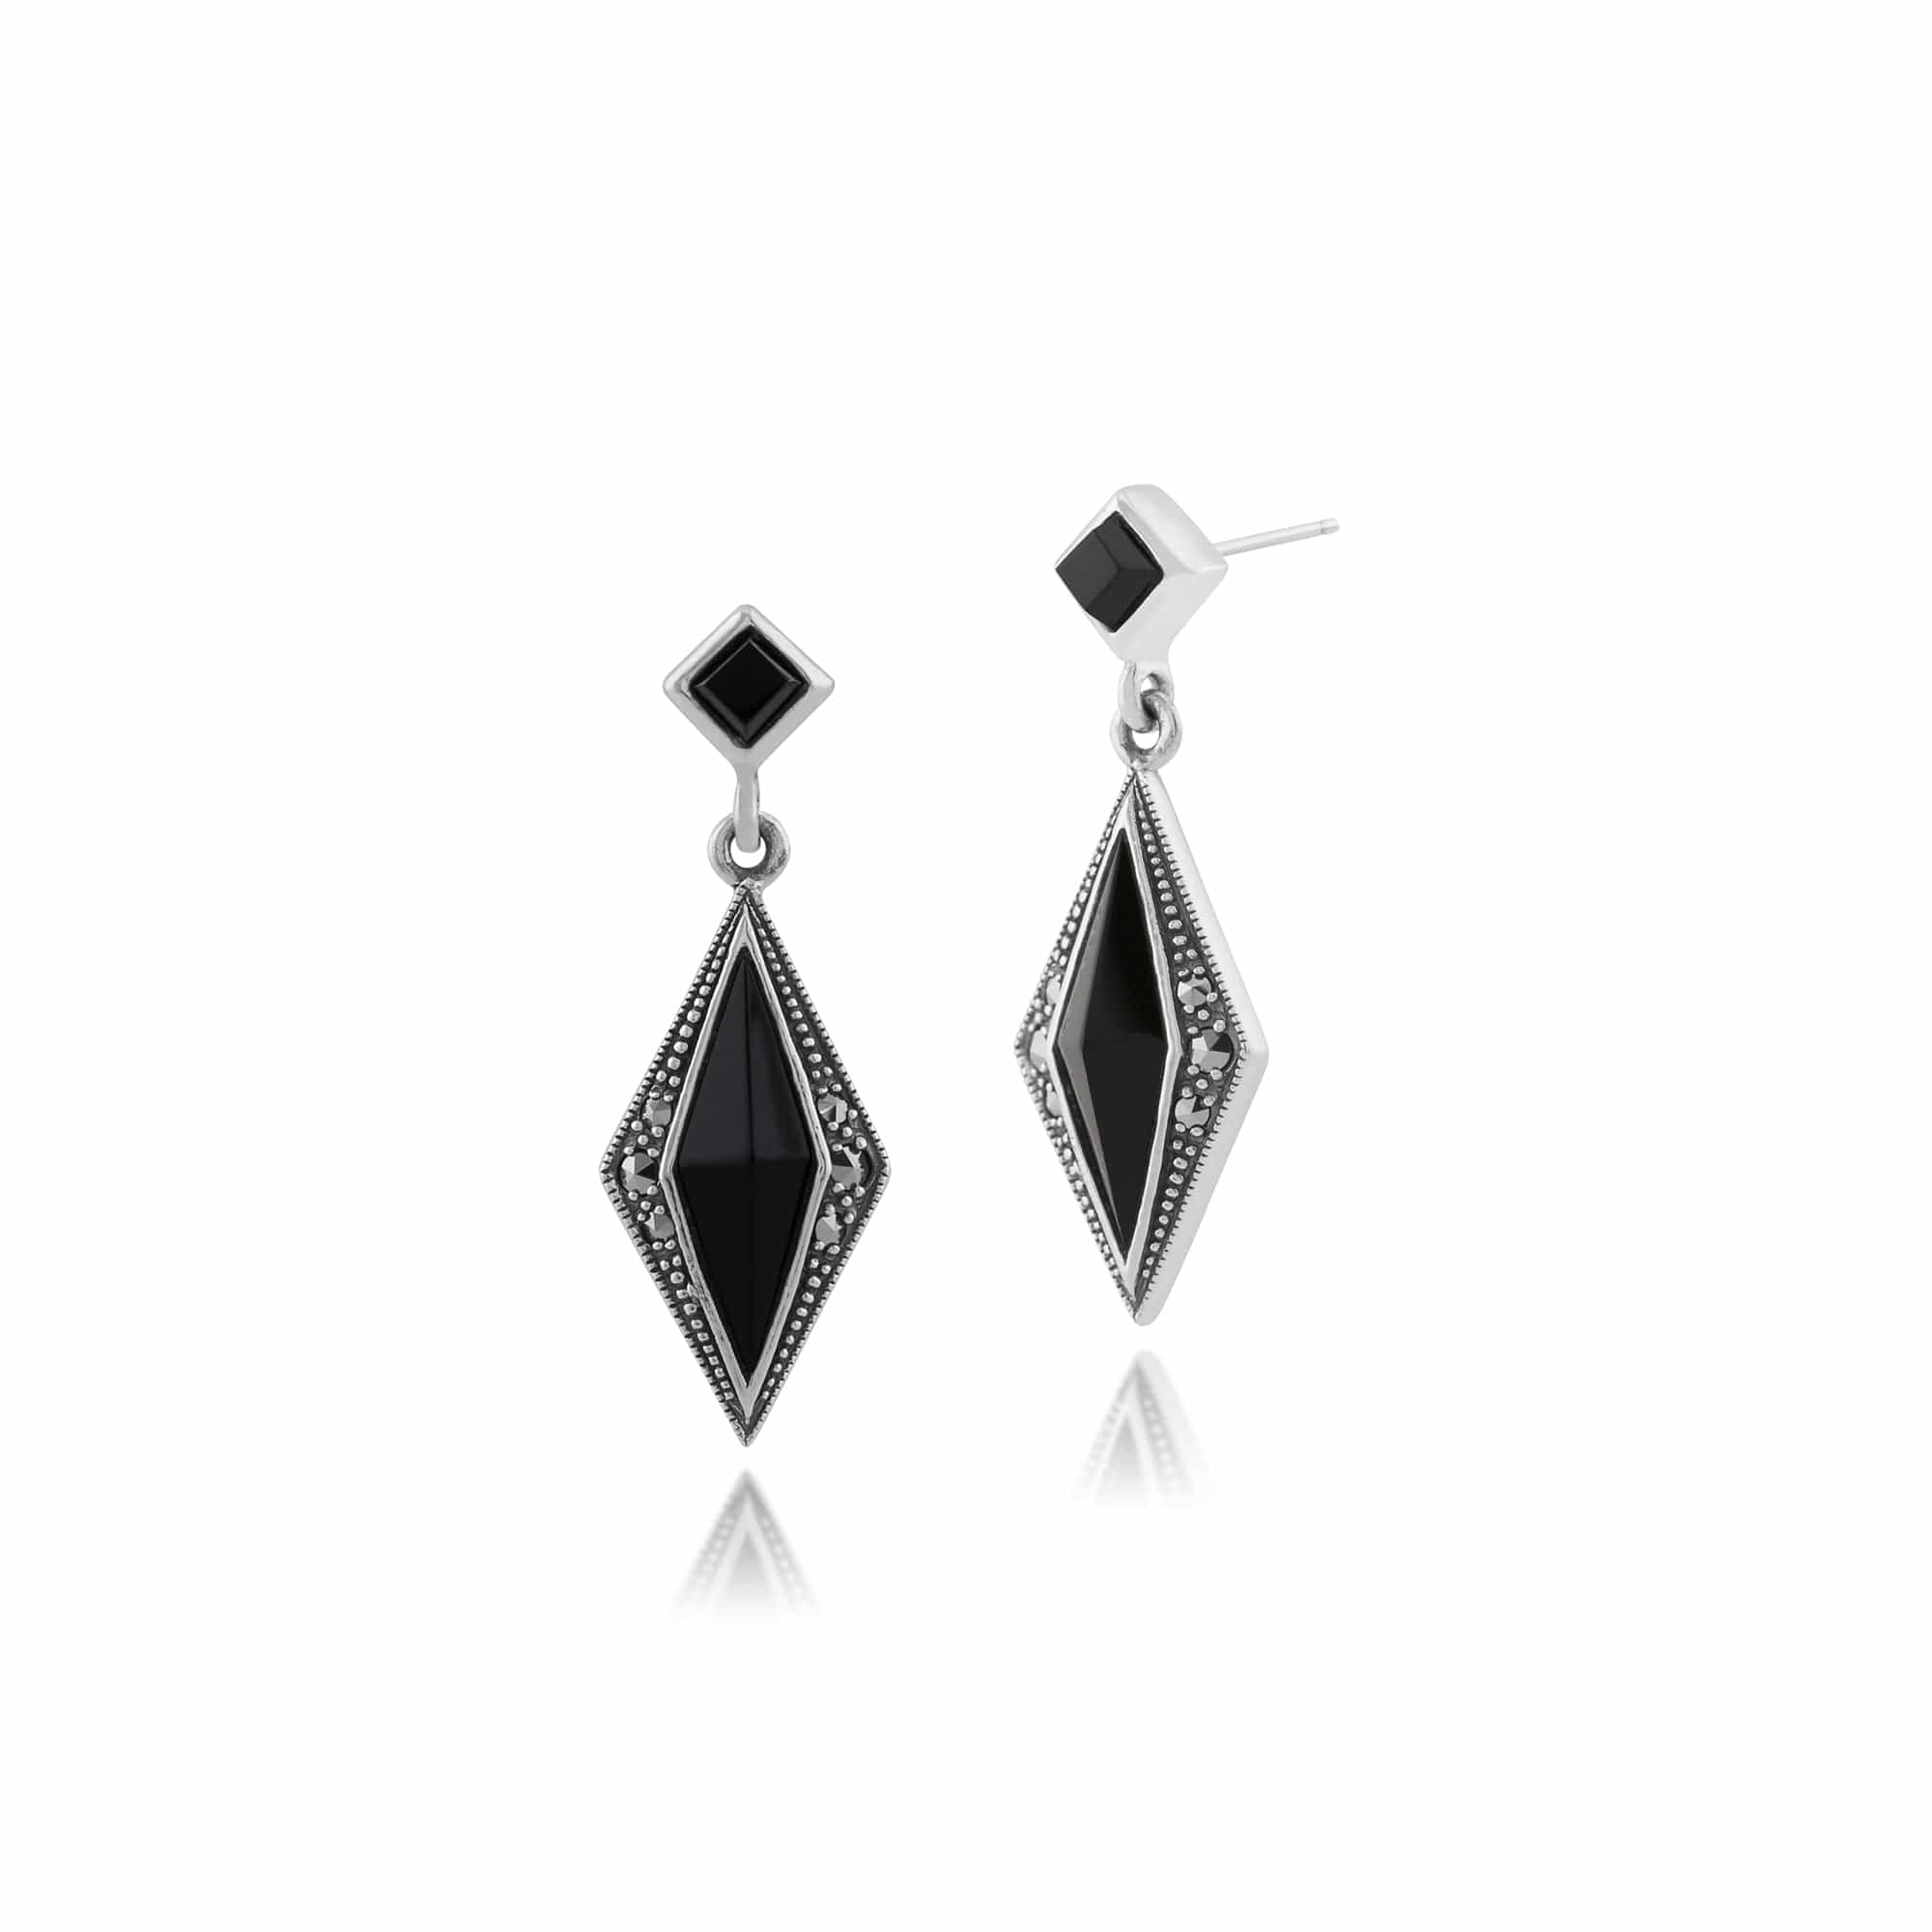 Gemondo 925 Sterling Silver 1.1ct Black Onyx & Marcasite Art Deco Drop Earrings Image